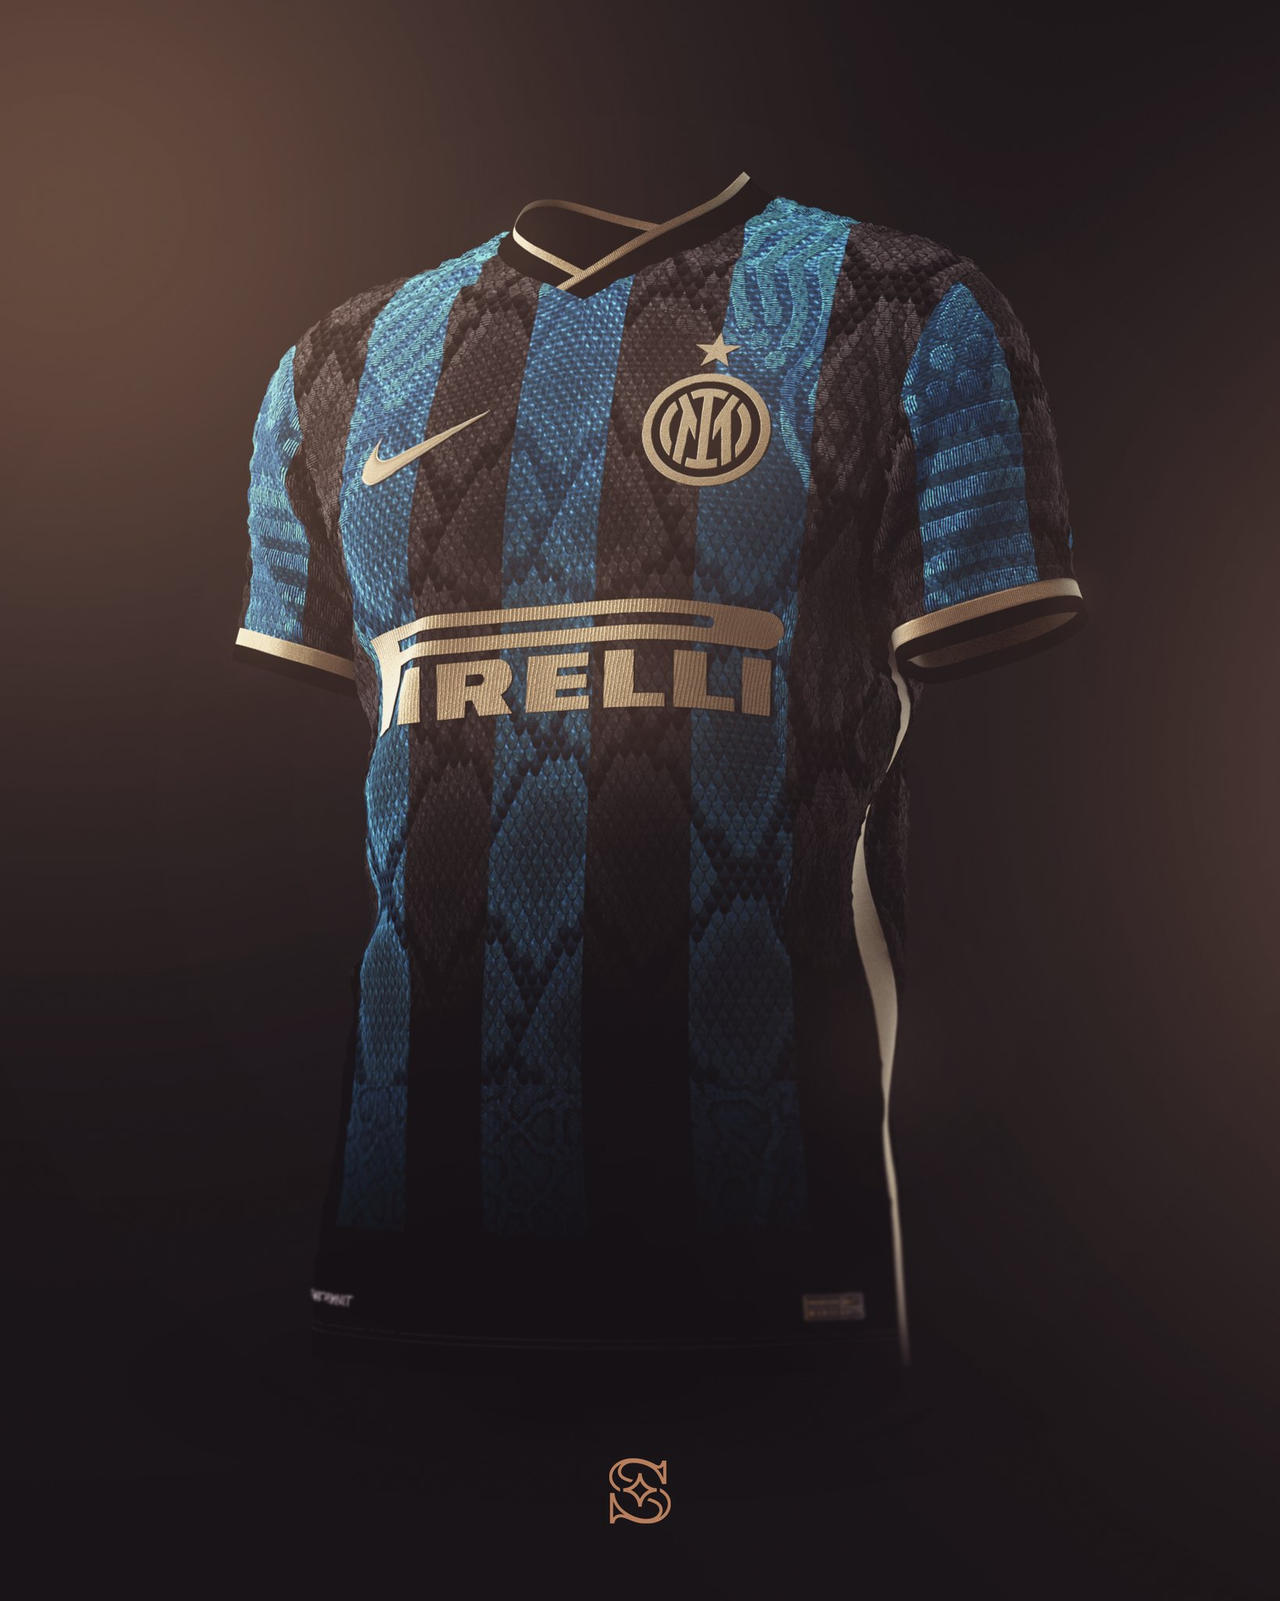 maglia Inter Milano kit 2021 (1) by FCInternazionale on DeviantArt